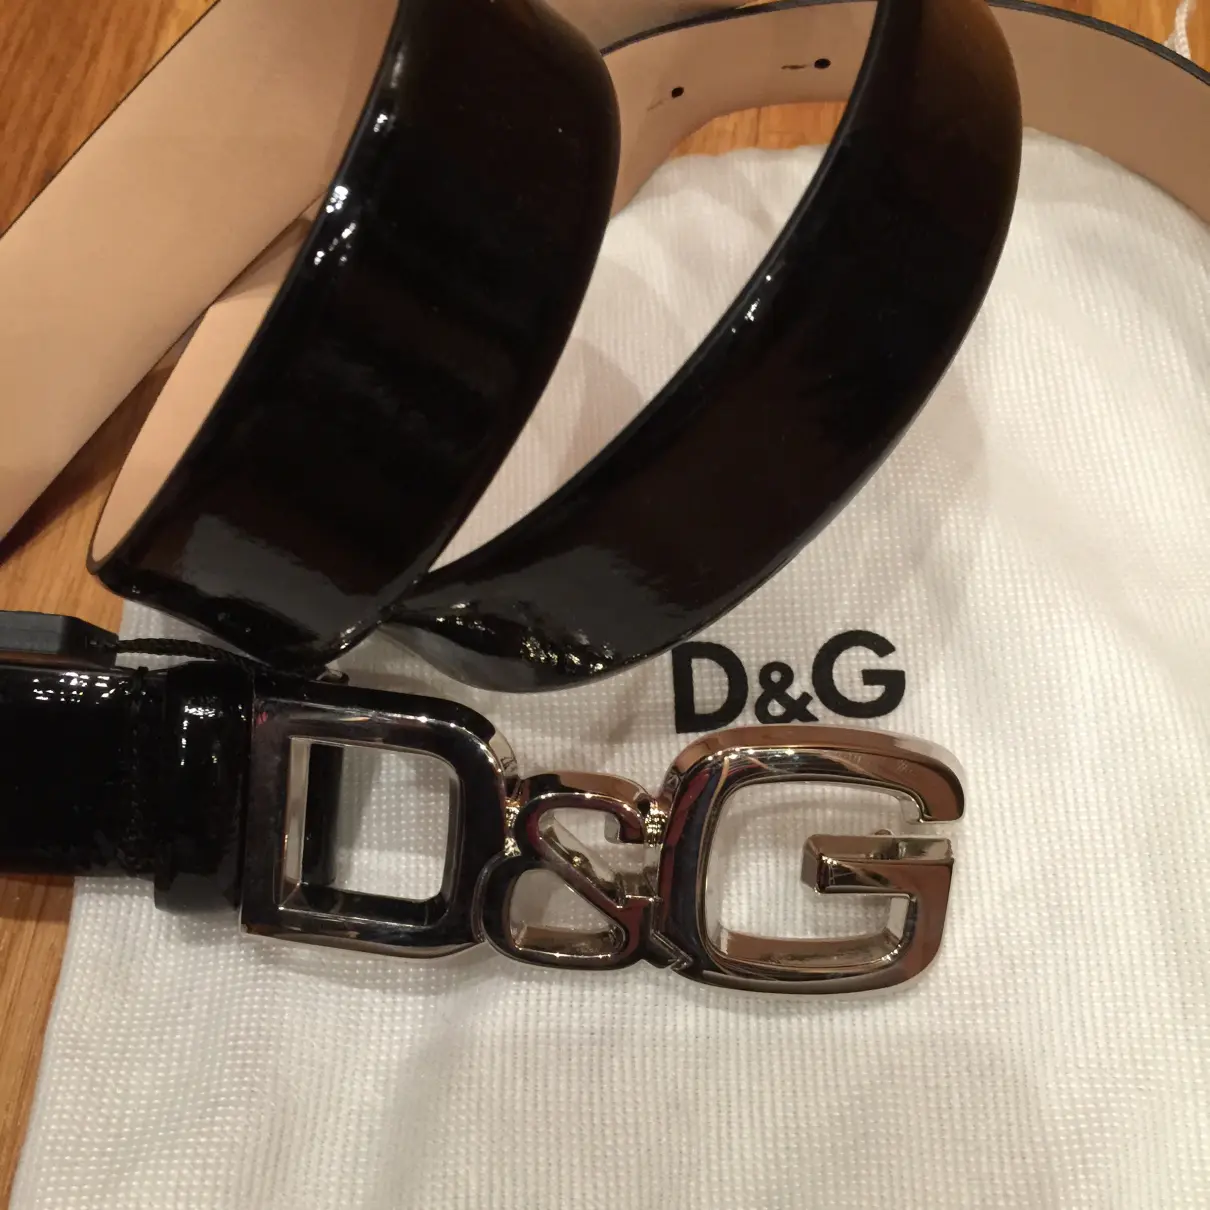 D&G Patent leather belt for sale